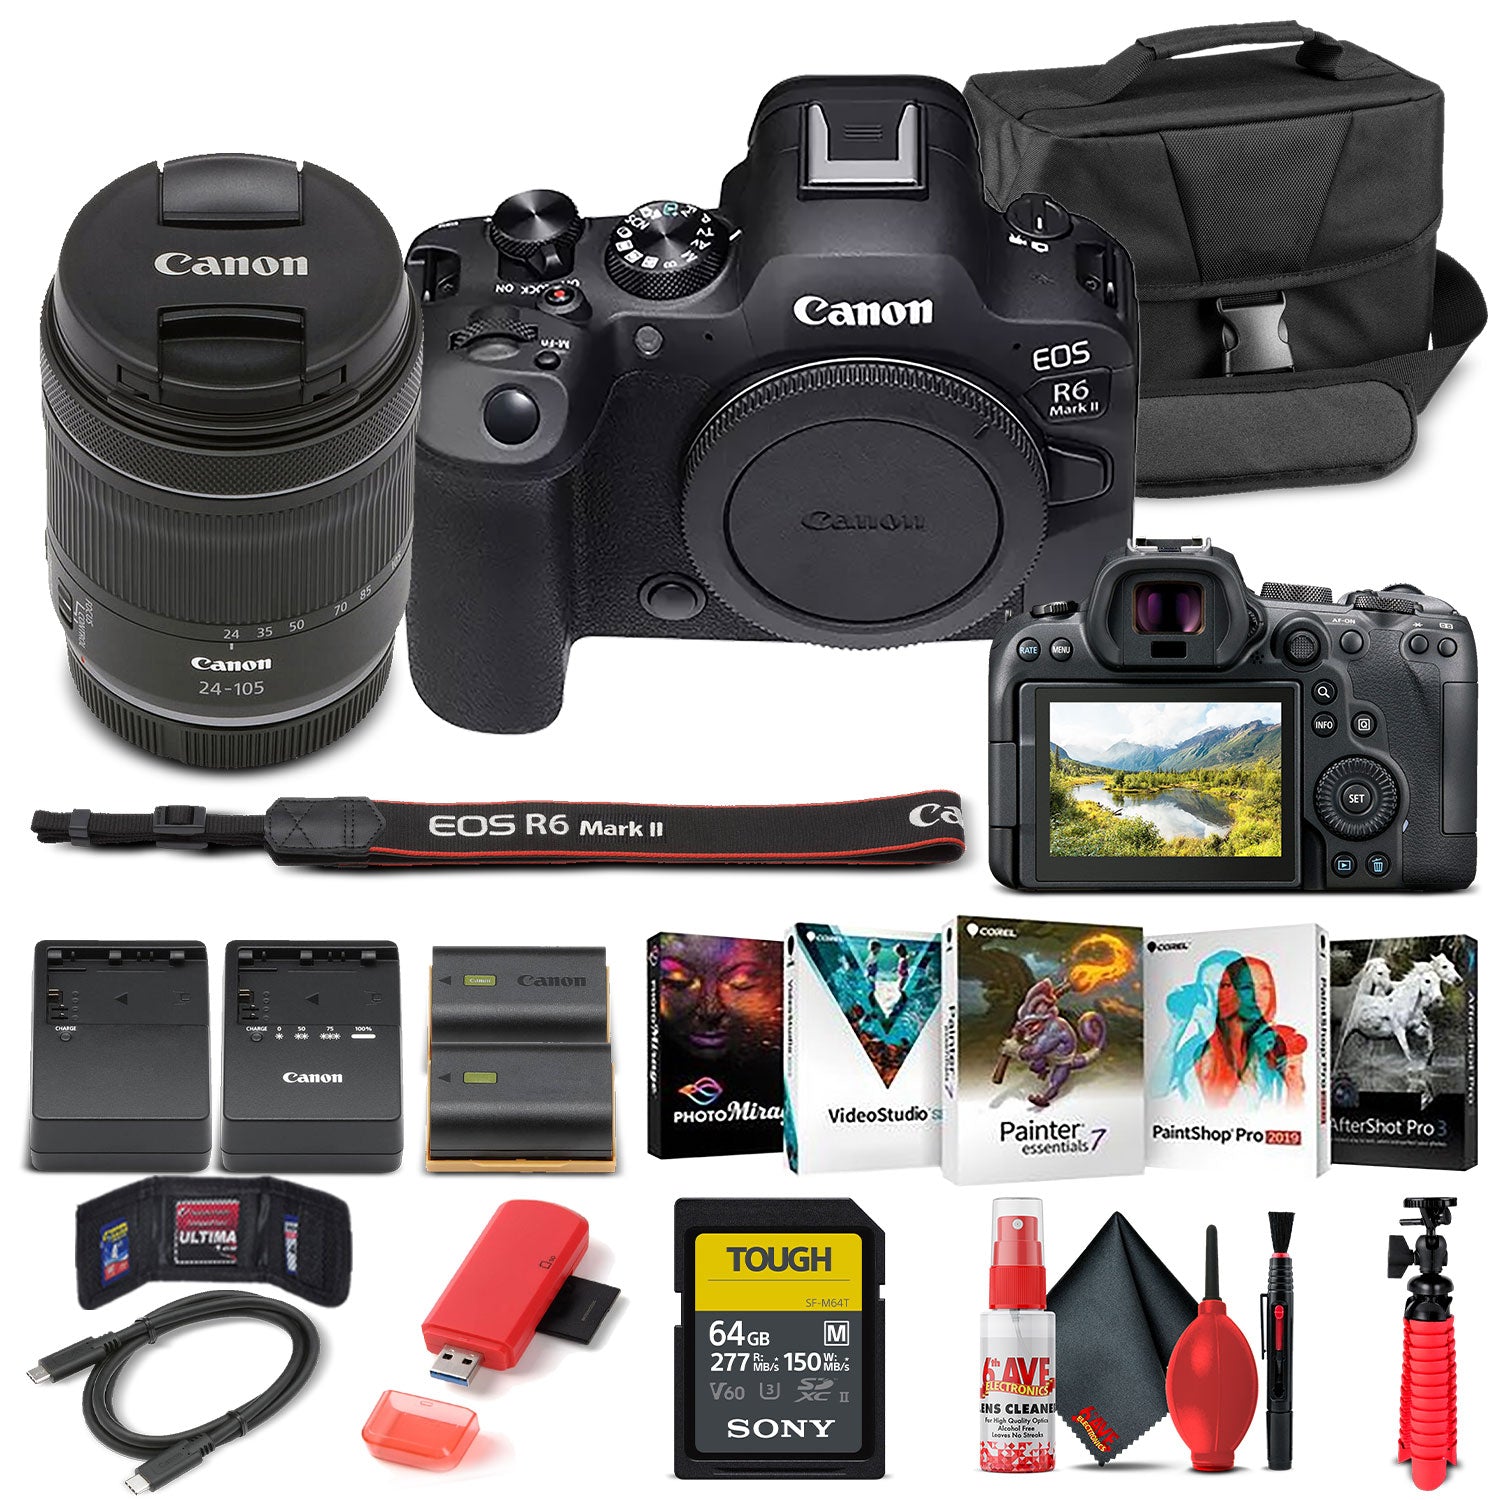 Canon EOS R6 Mark II Mirrorless Camera with 24-105mm f/4-7.1 Lens 5666C018 - Basic Bundle